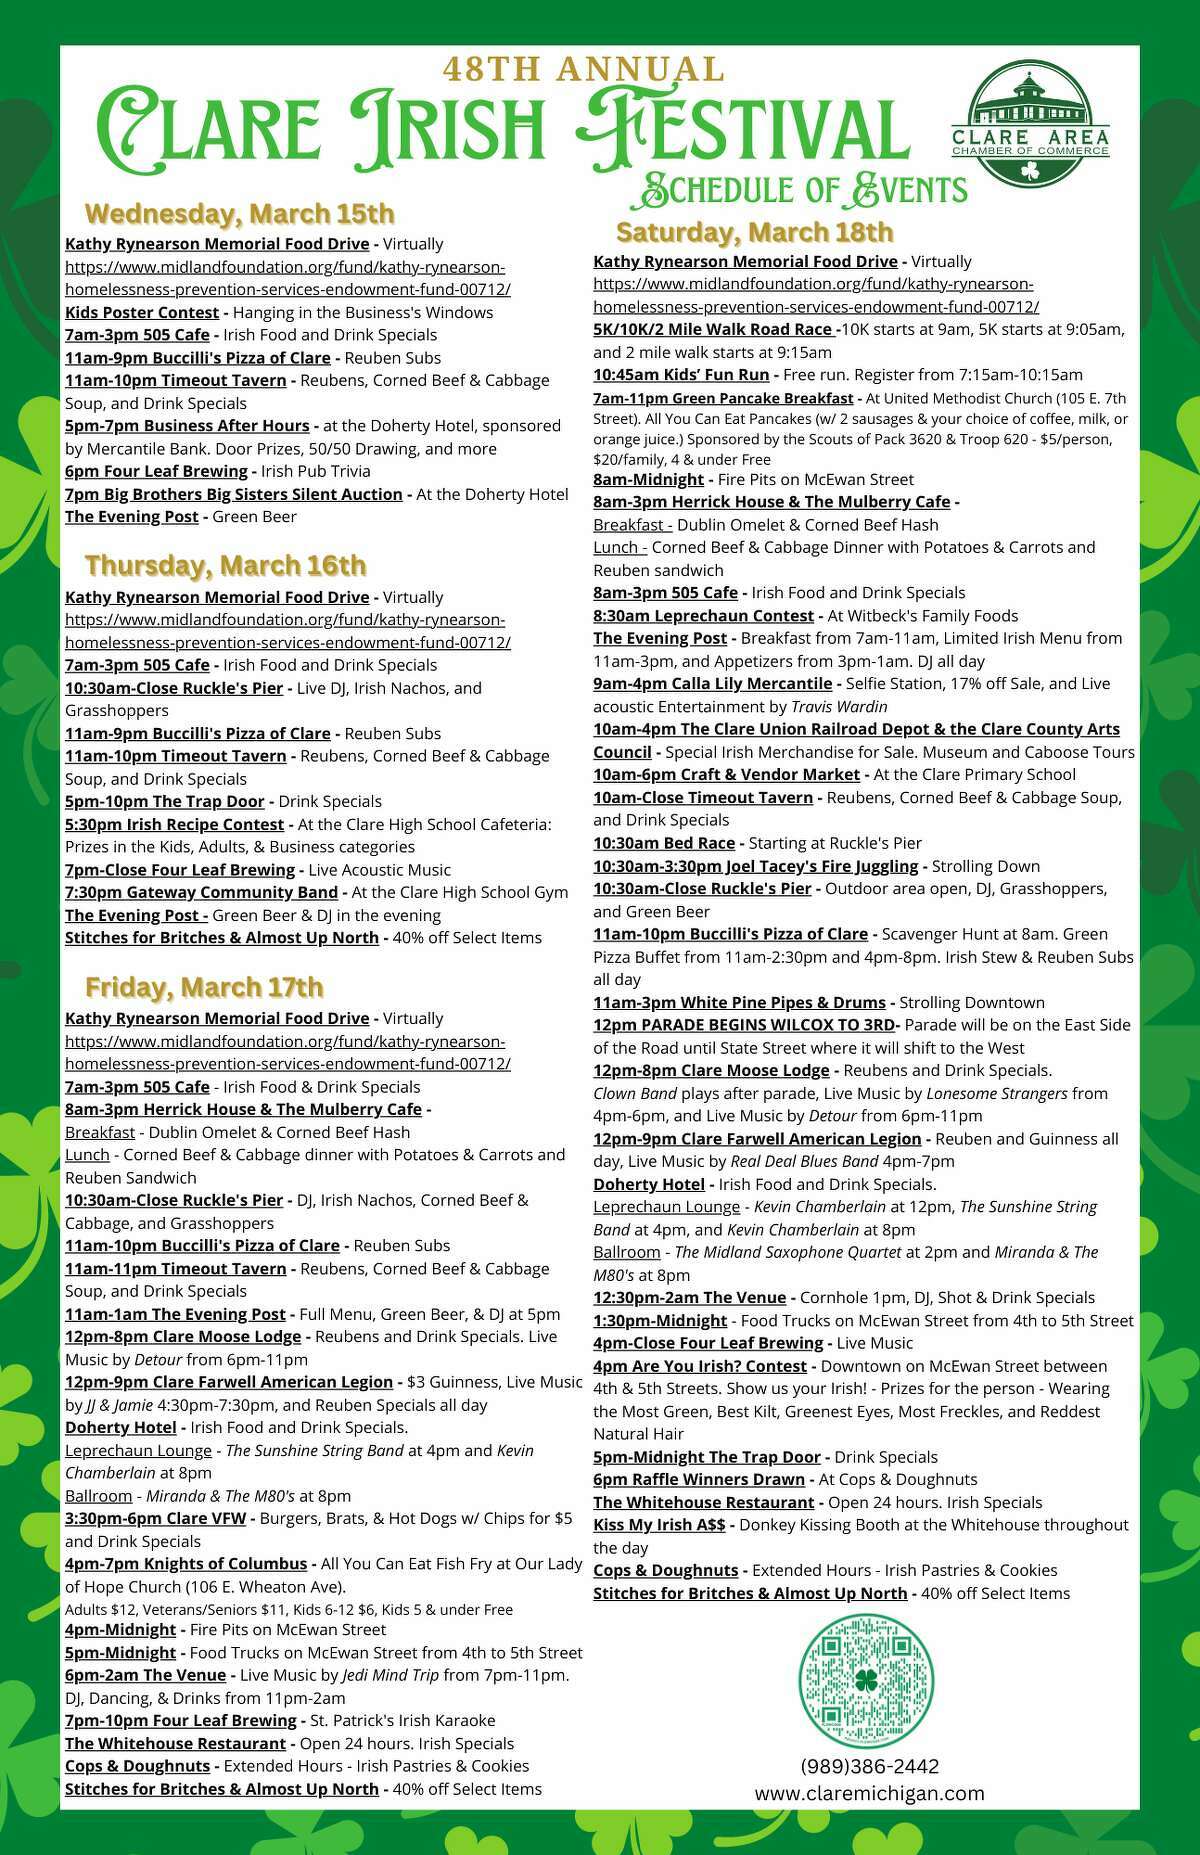 Clare's 48th Annual Irish Festival continues through March 18